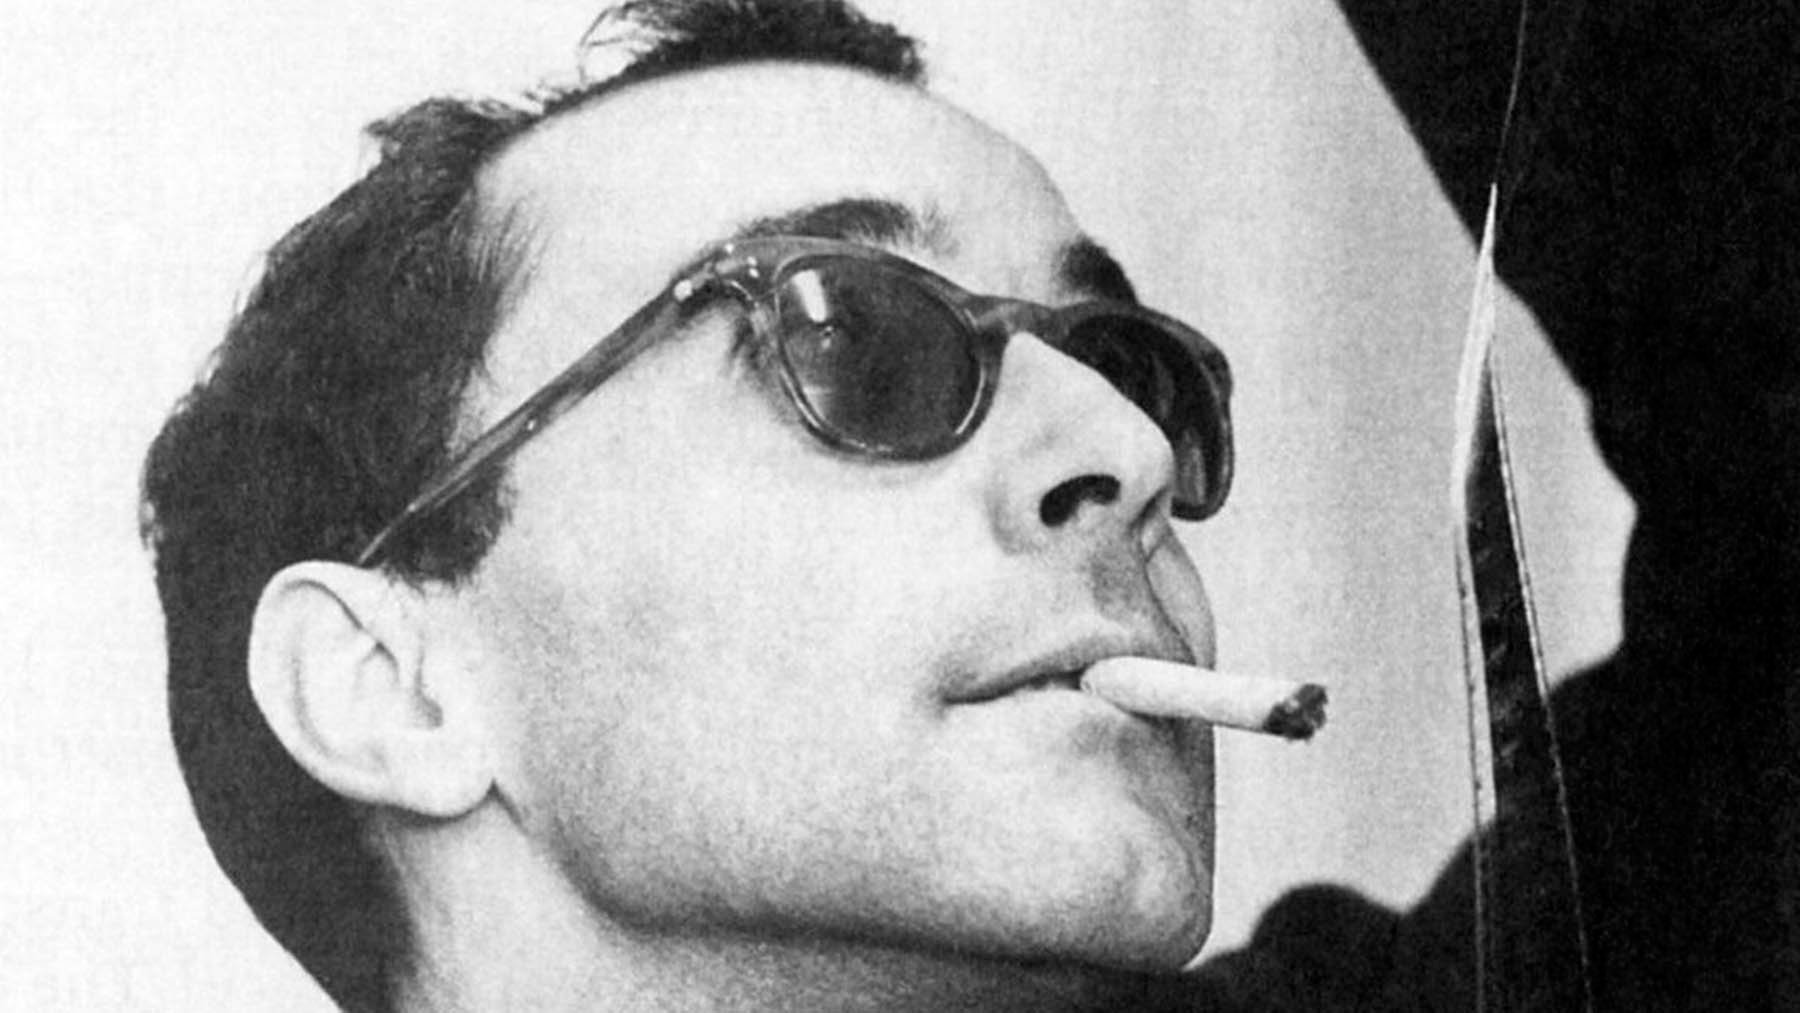 El mundo del cine rinde tributo a Jean-Luc Godard